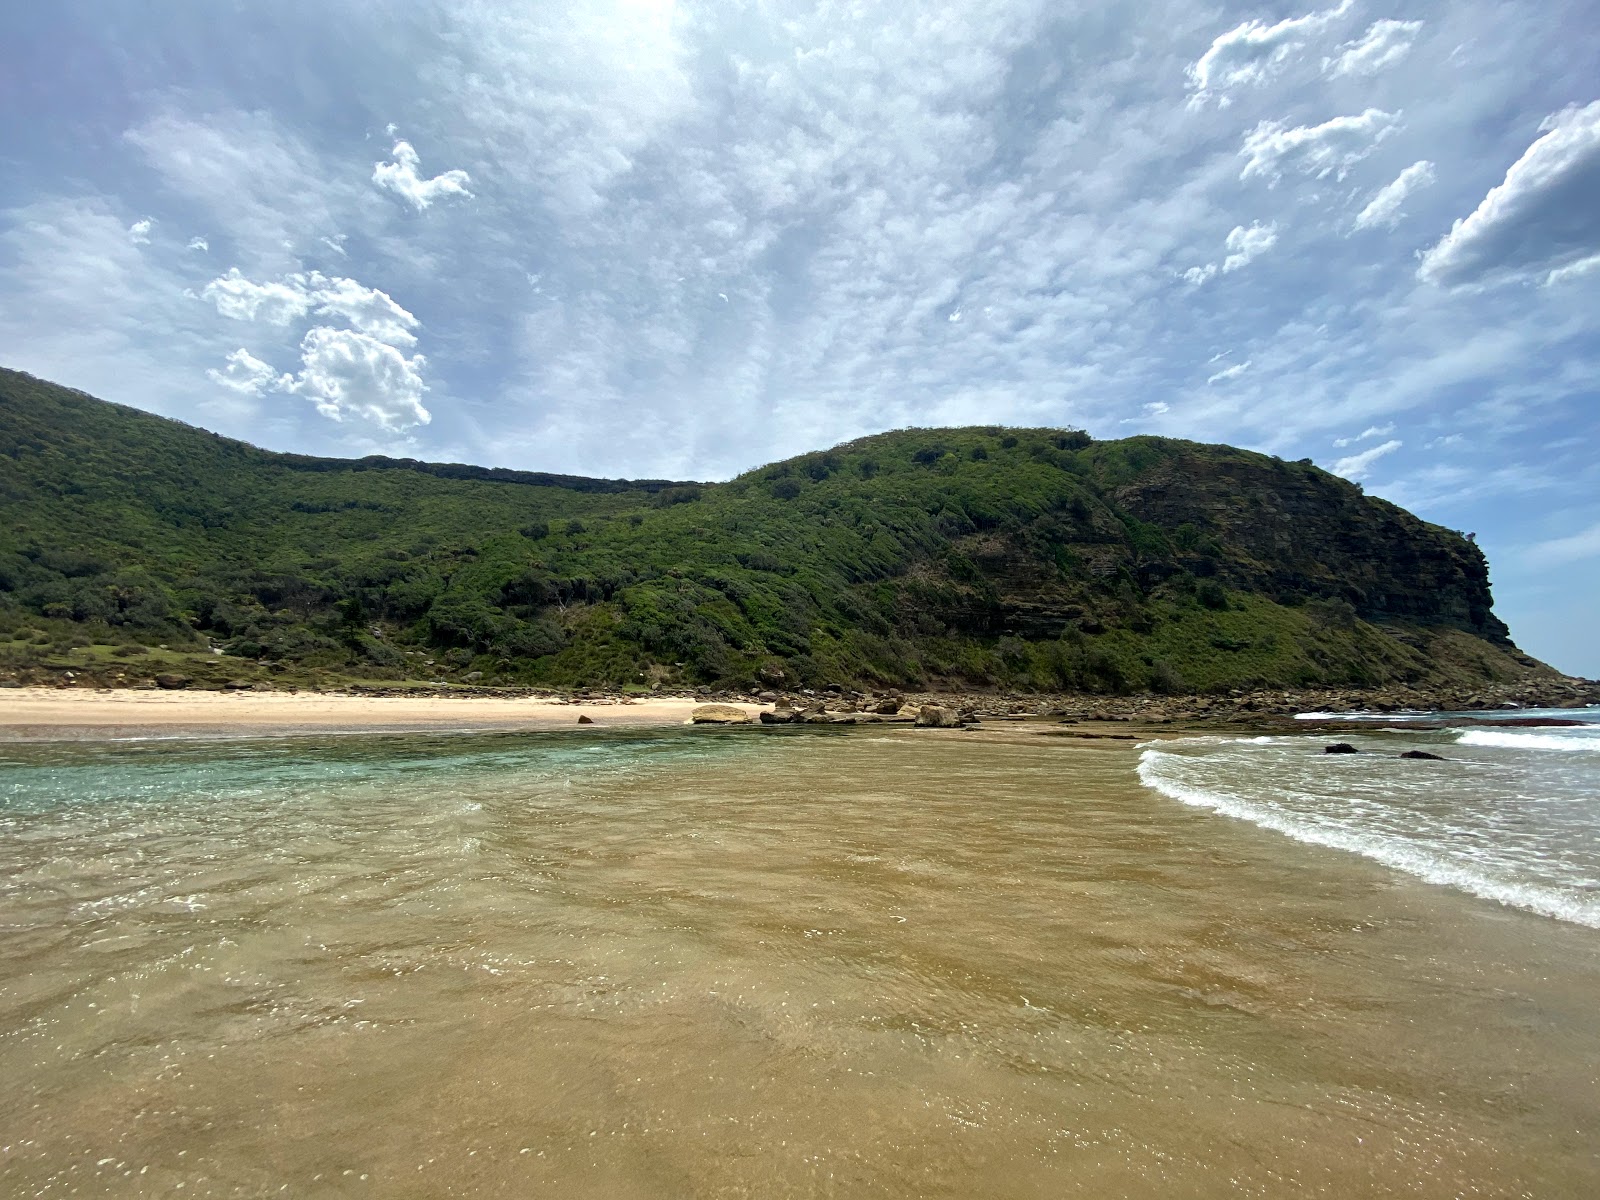 Fotografija Werrong Beach nahaja se v naravnem okolju